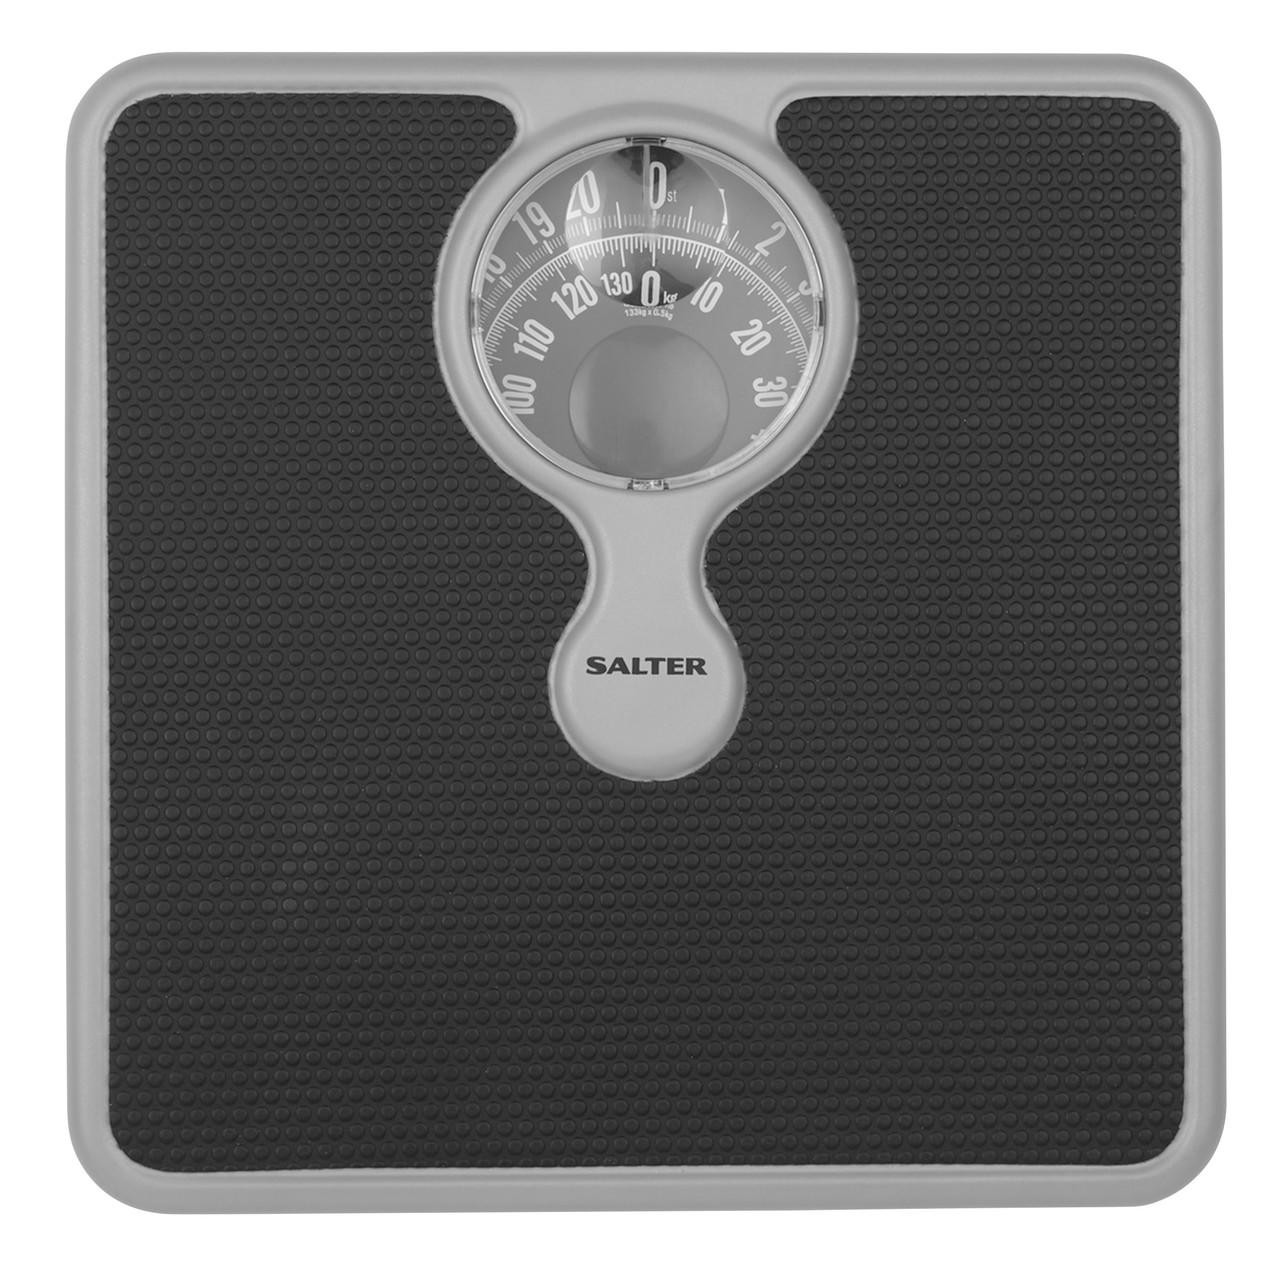 Bathroom scale with body monitor and Bluetooth BSM711BT - Blaupunkt